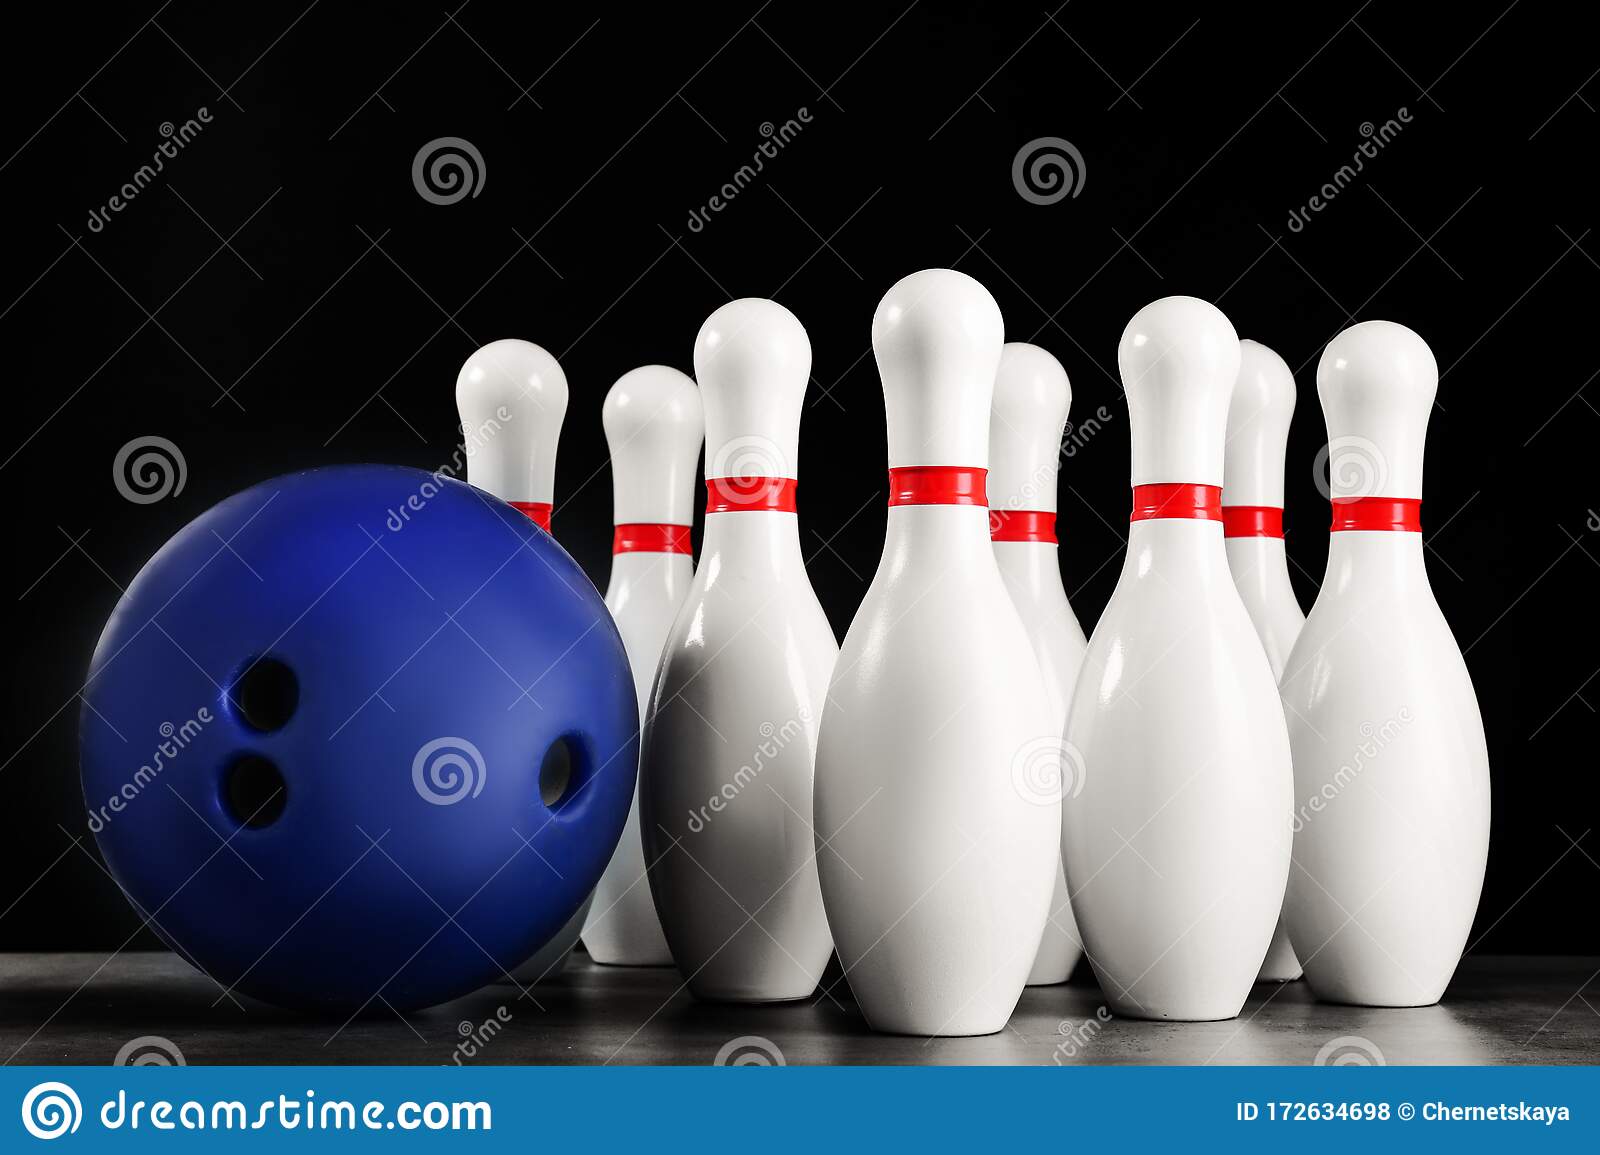 Detail Images Of Bowling Balls And Pins Nomer 31